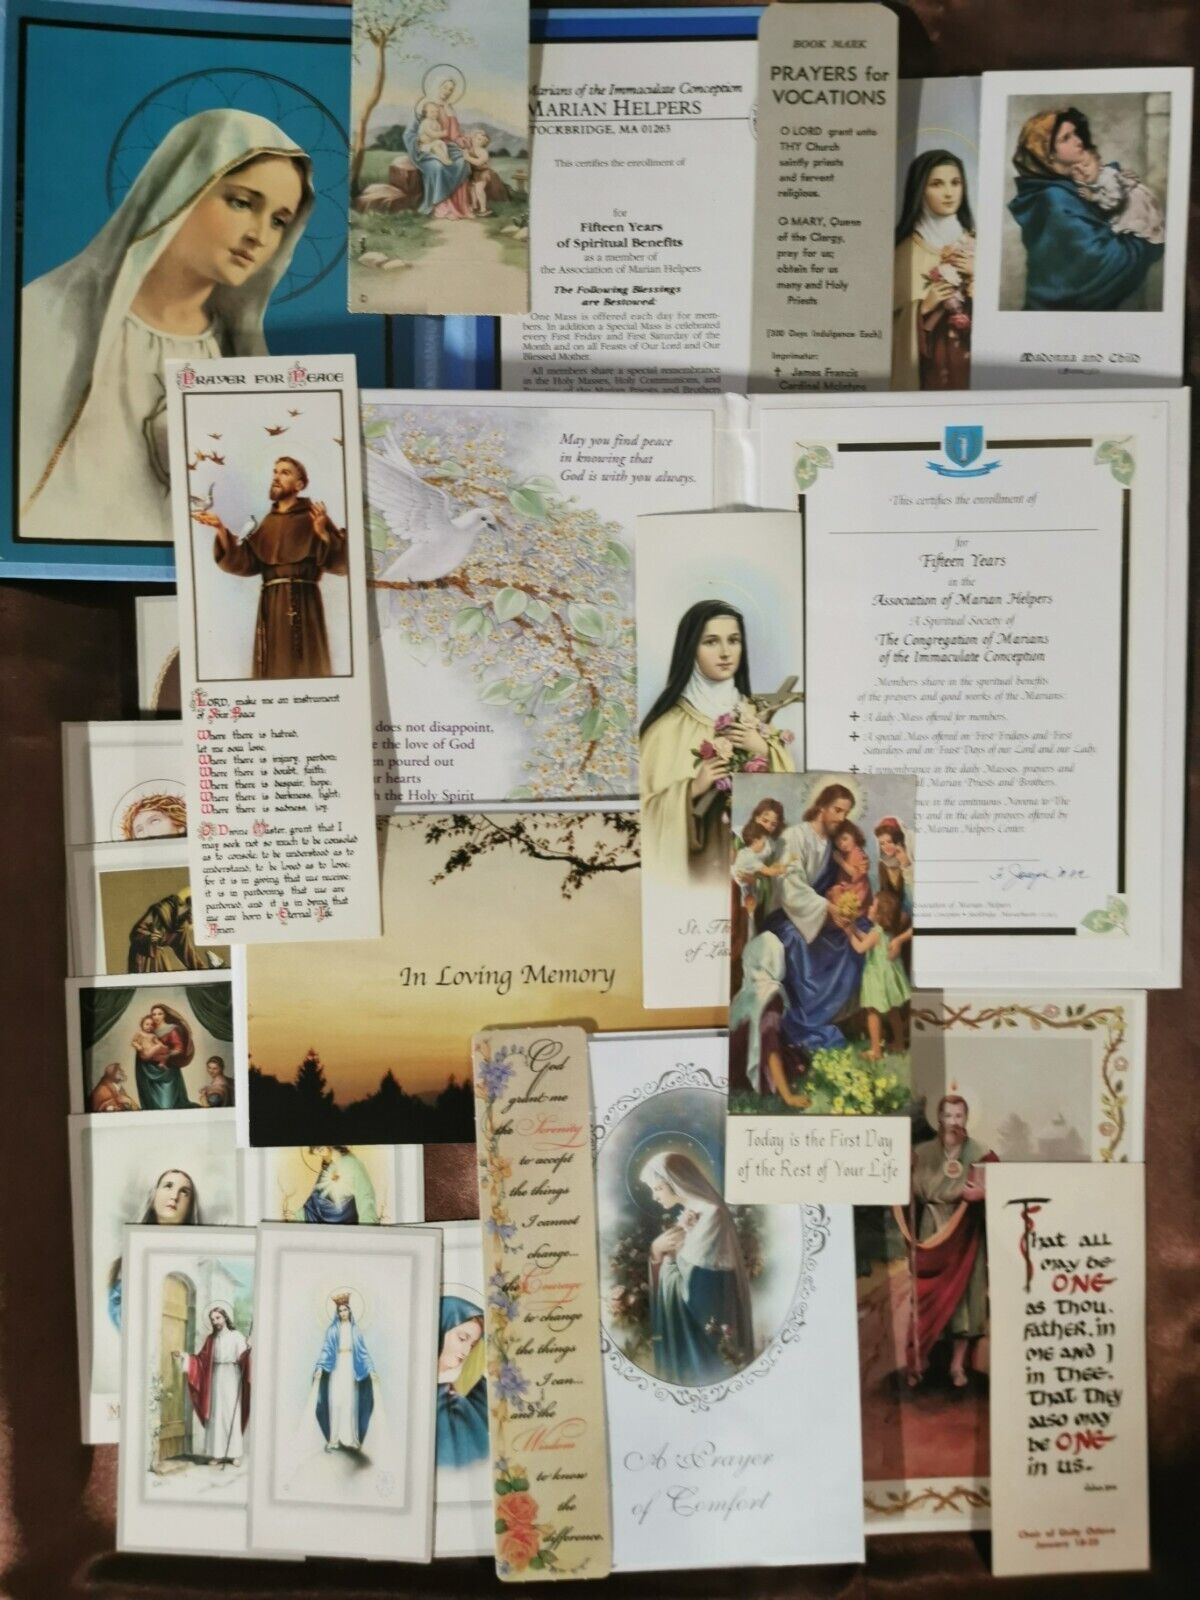 Lot Of 24 Vintage Catholic Prayer Cards Bookmarks Ephemera Marian Helper Folders